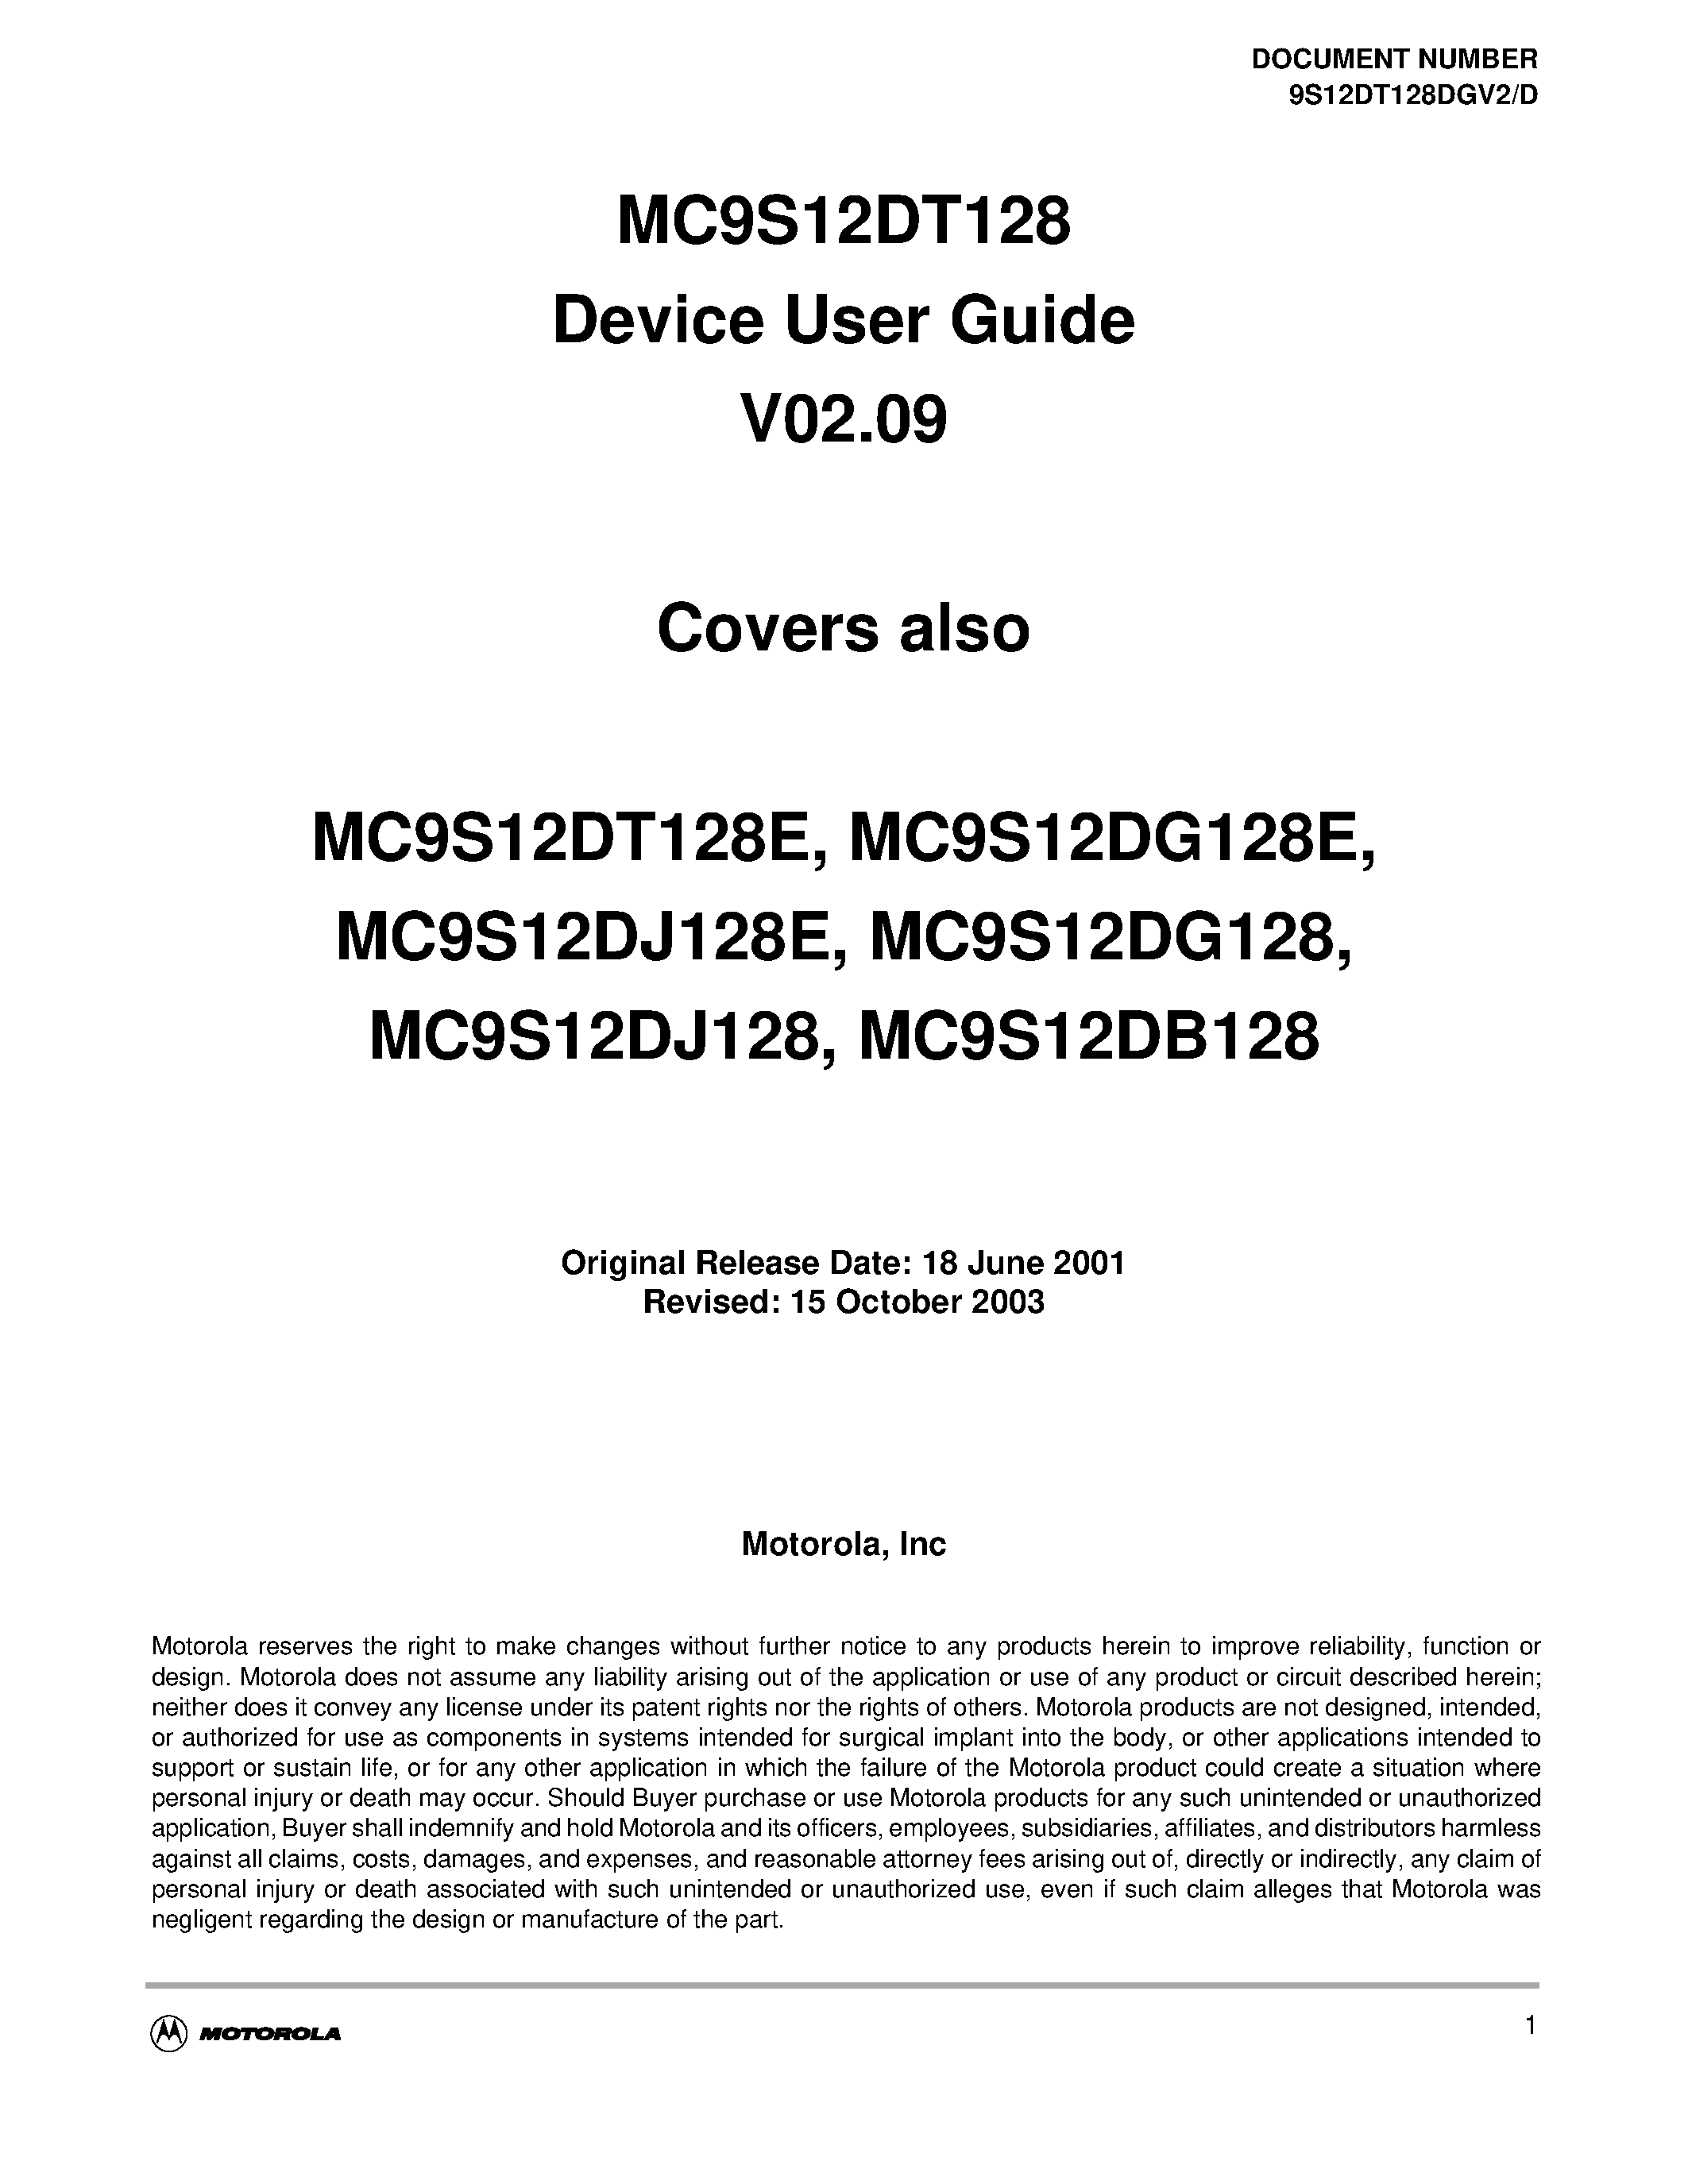 Datasheet S12MEBIV3 - MC9S12DT128 Device User Guide V02.09 page 1